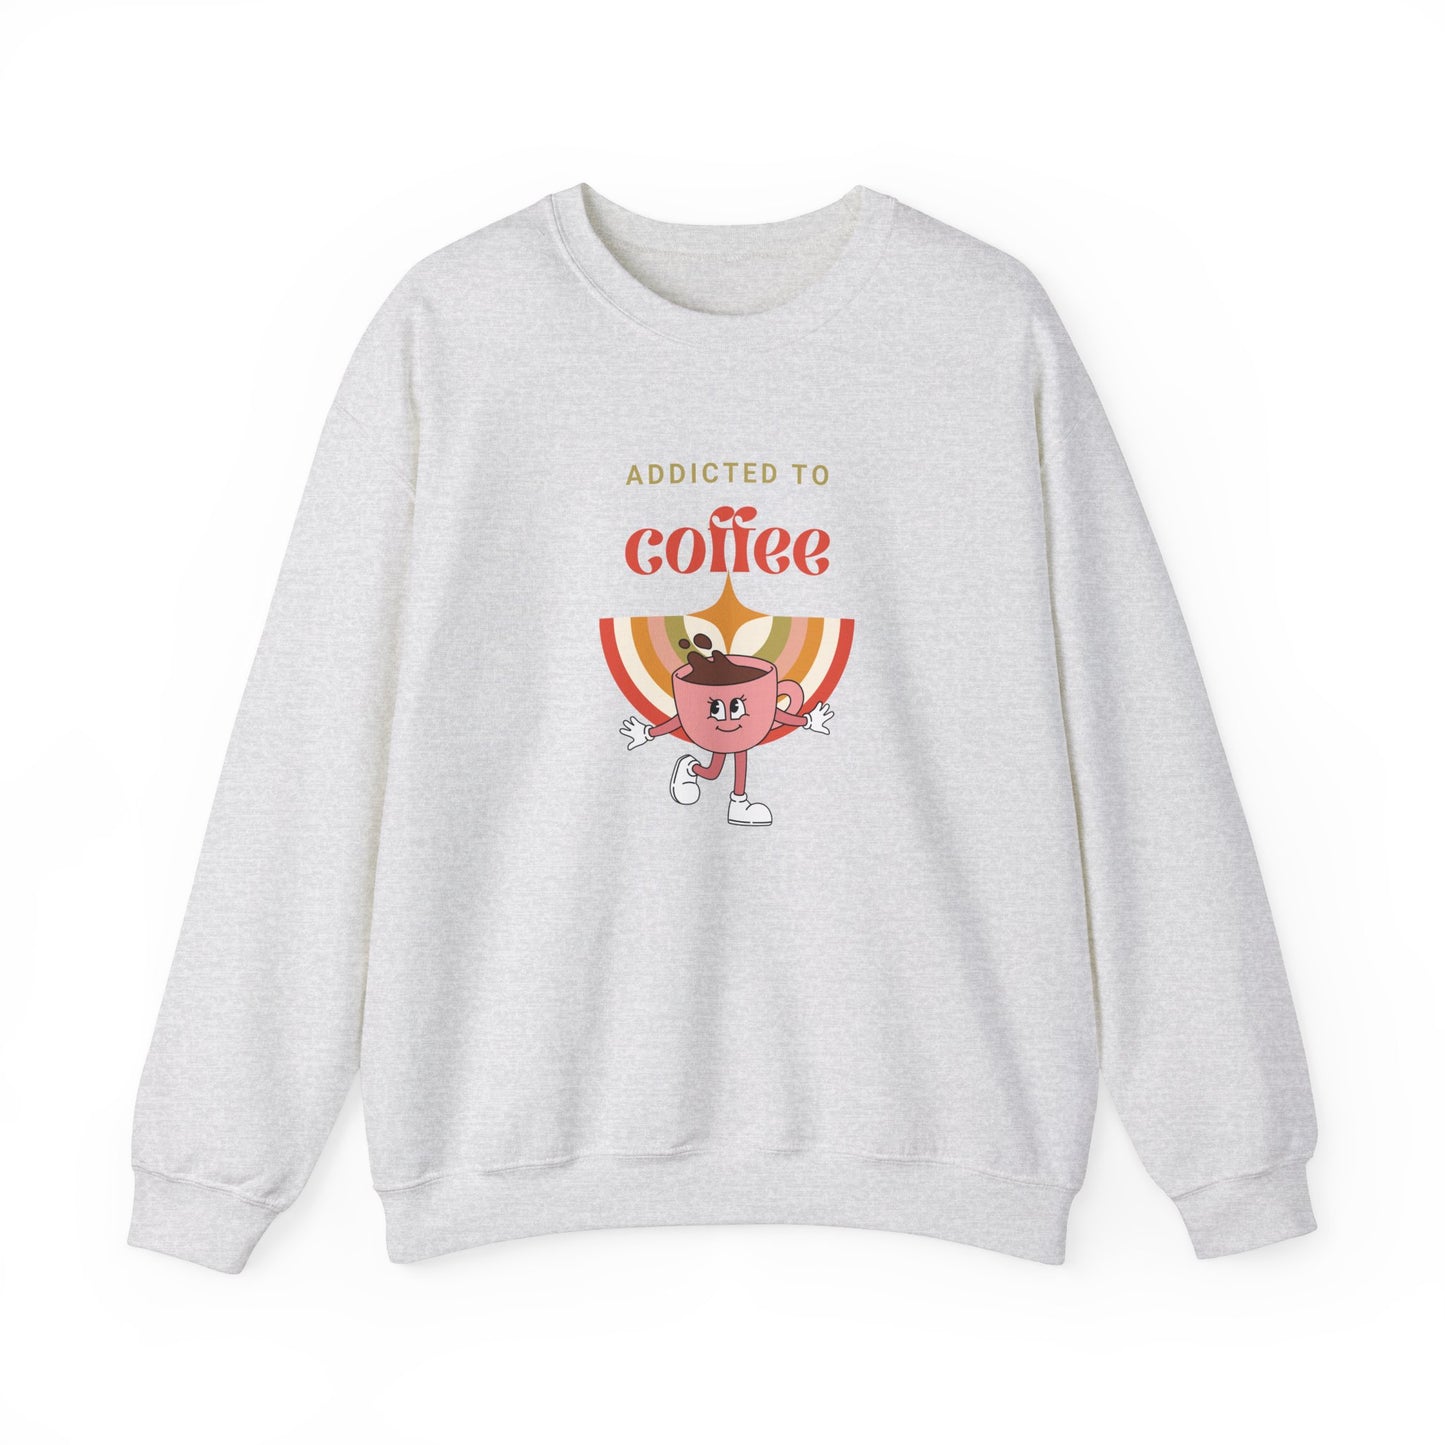 ADDICTED TO COFFEE round-neck sweatshirt - adult